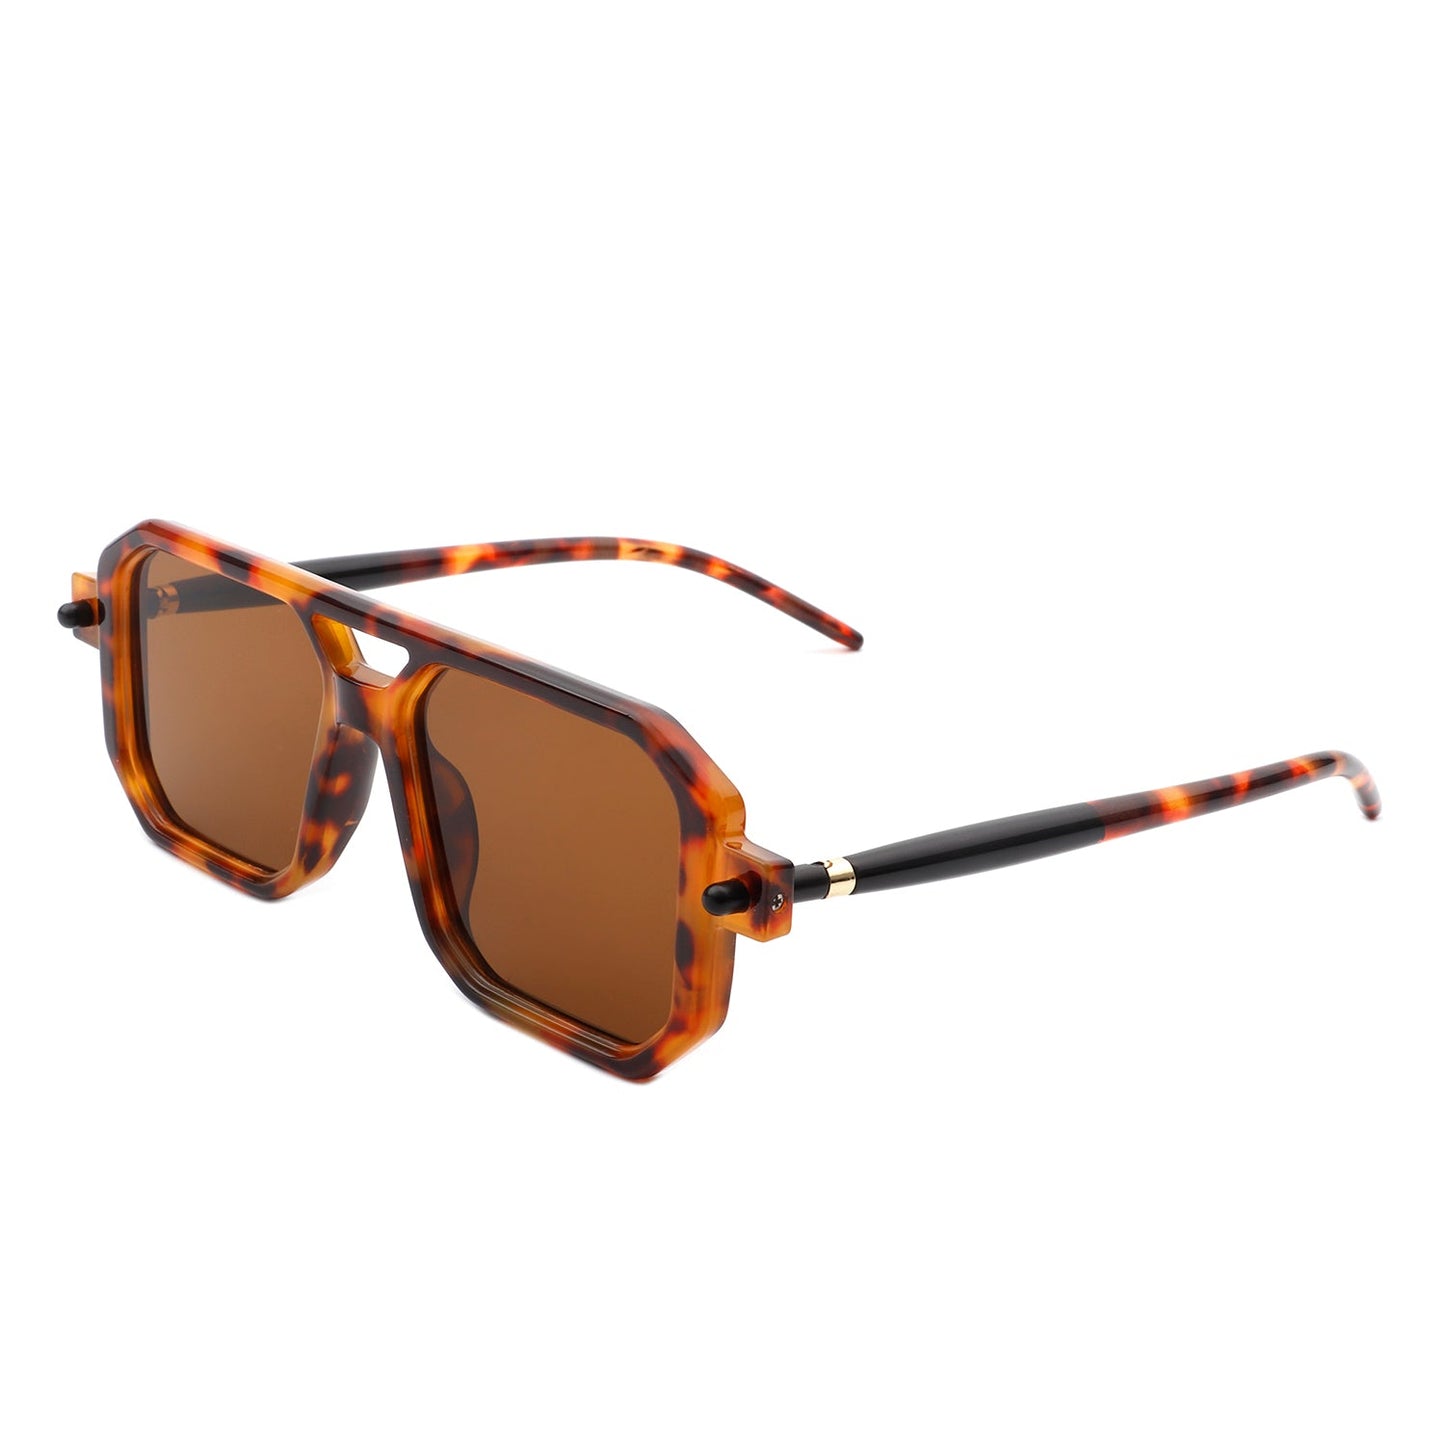 Bluebird - Retro Square Flat Top Brow-Bar Fashion Sunglasses-4